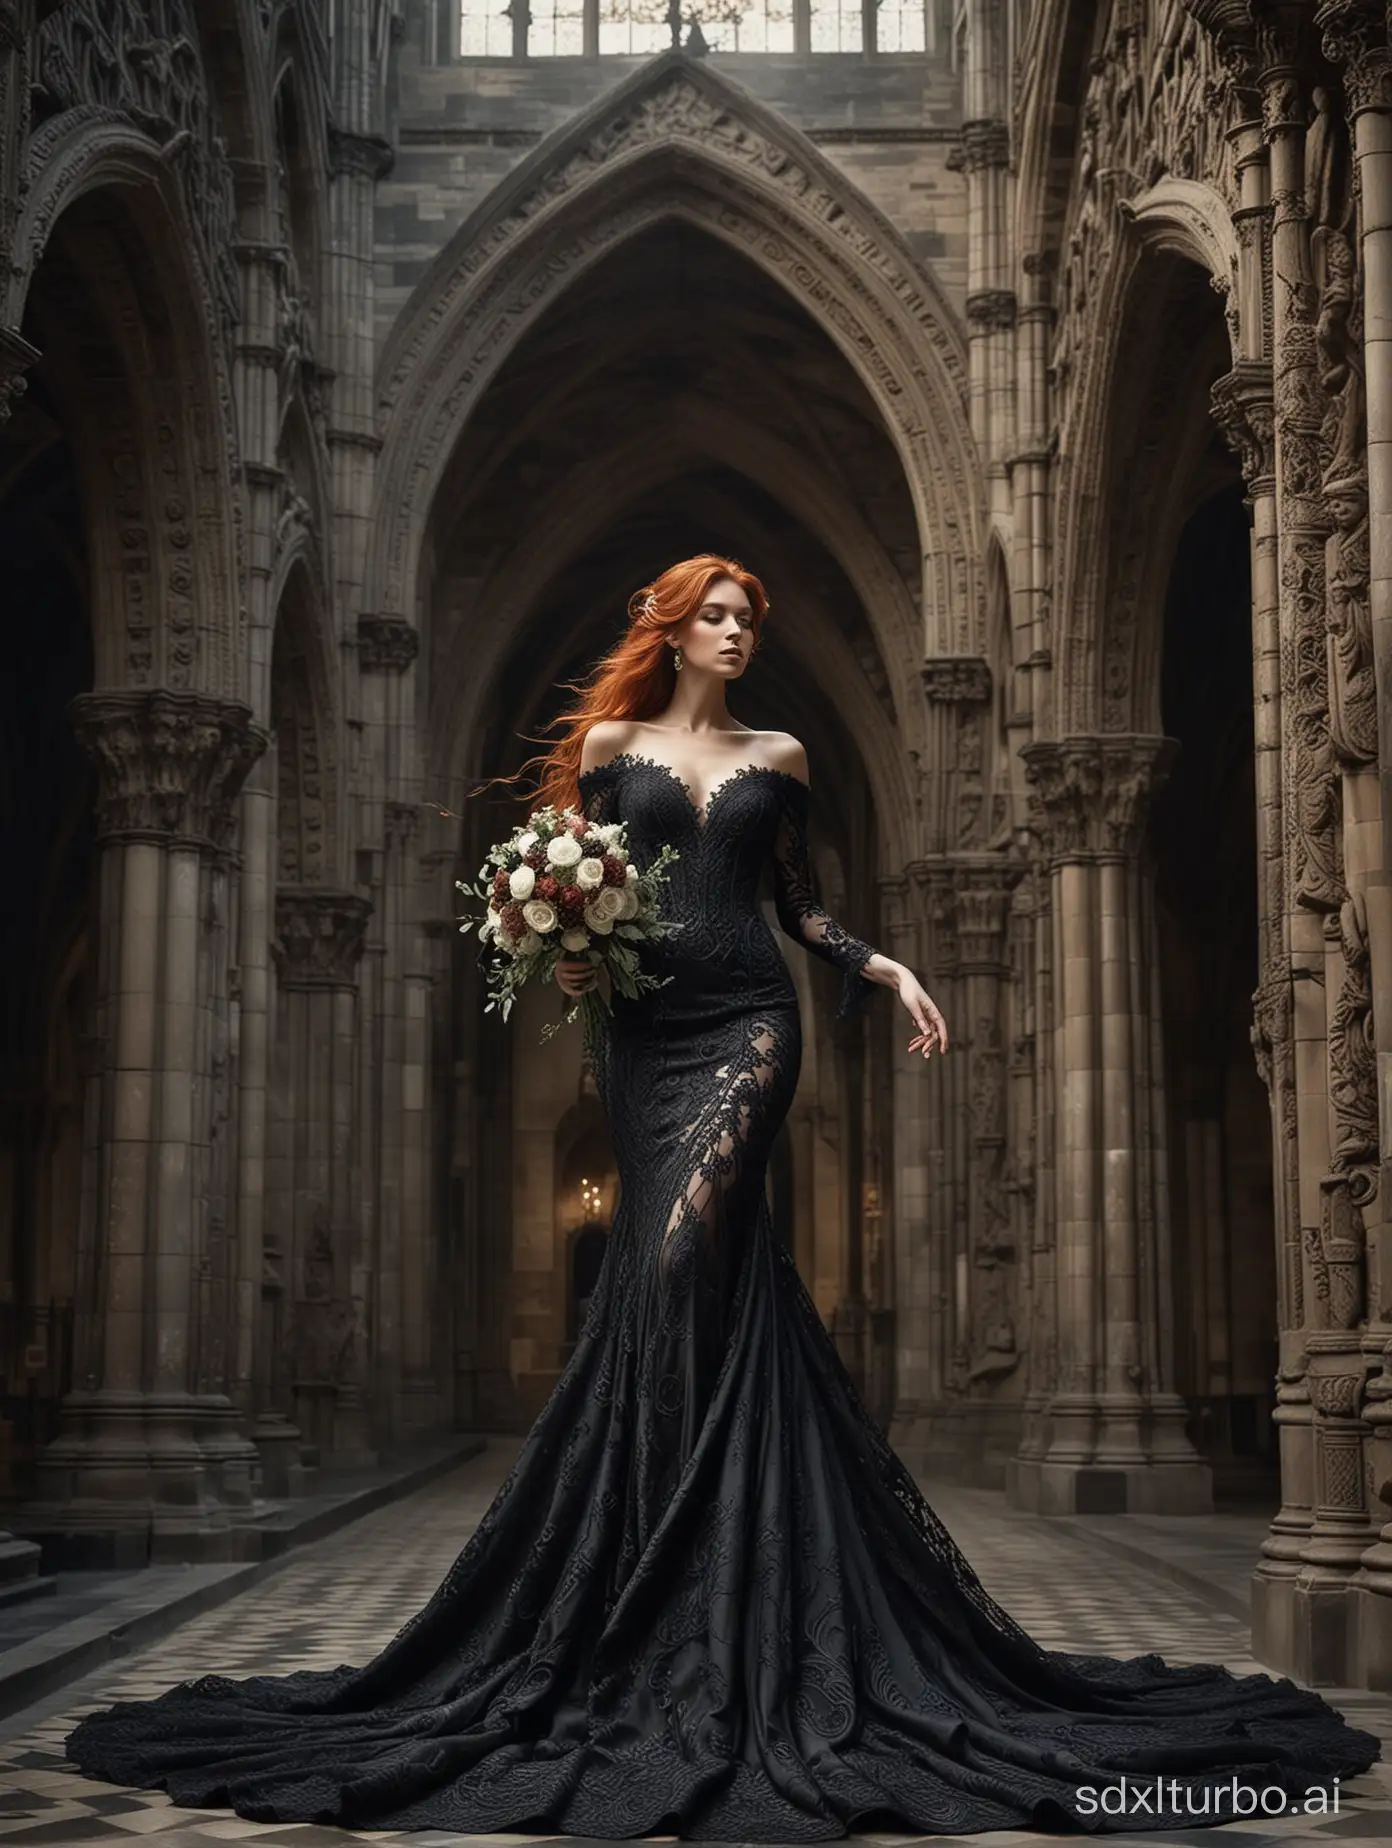 Opulent-Gothic-Fantasy-Portrait-of-a-Woman-in-Elaborate-Dark-Gown